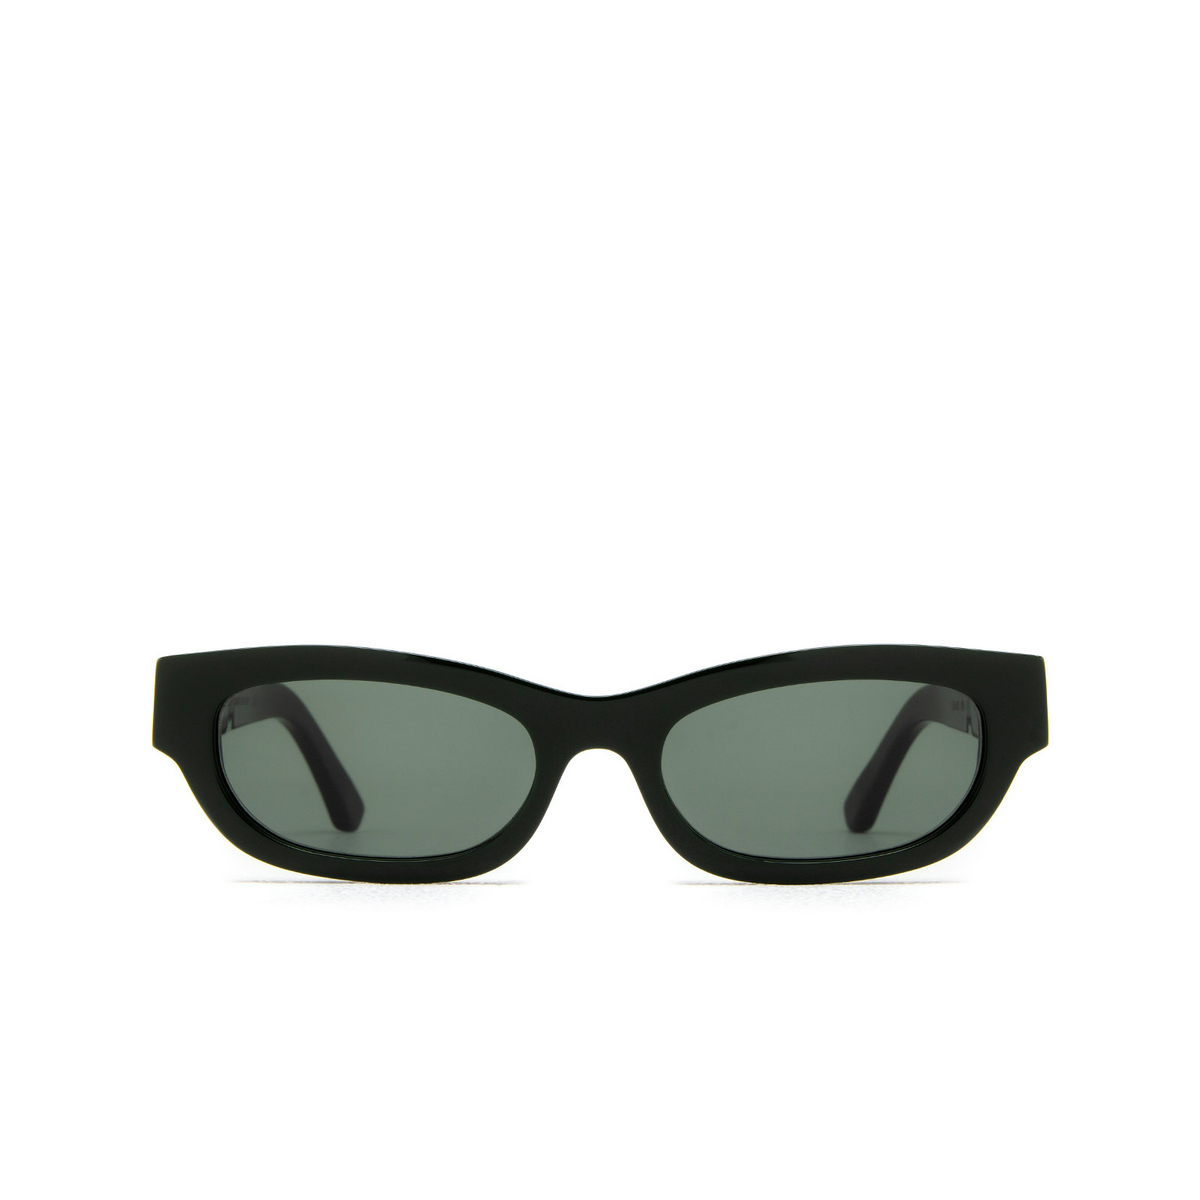 Huma TOJO Sunglasses 13 Green - front view